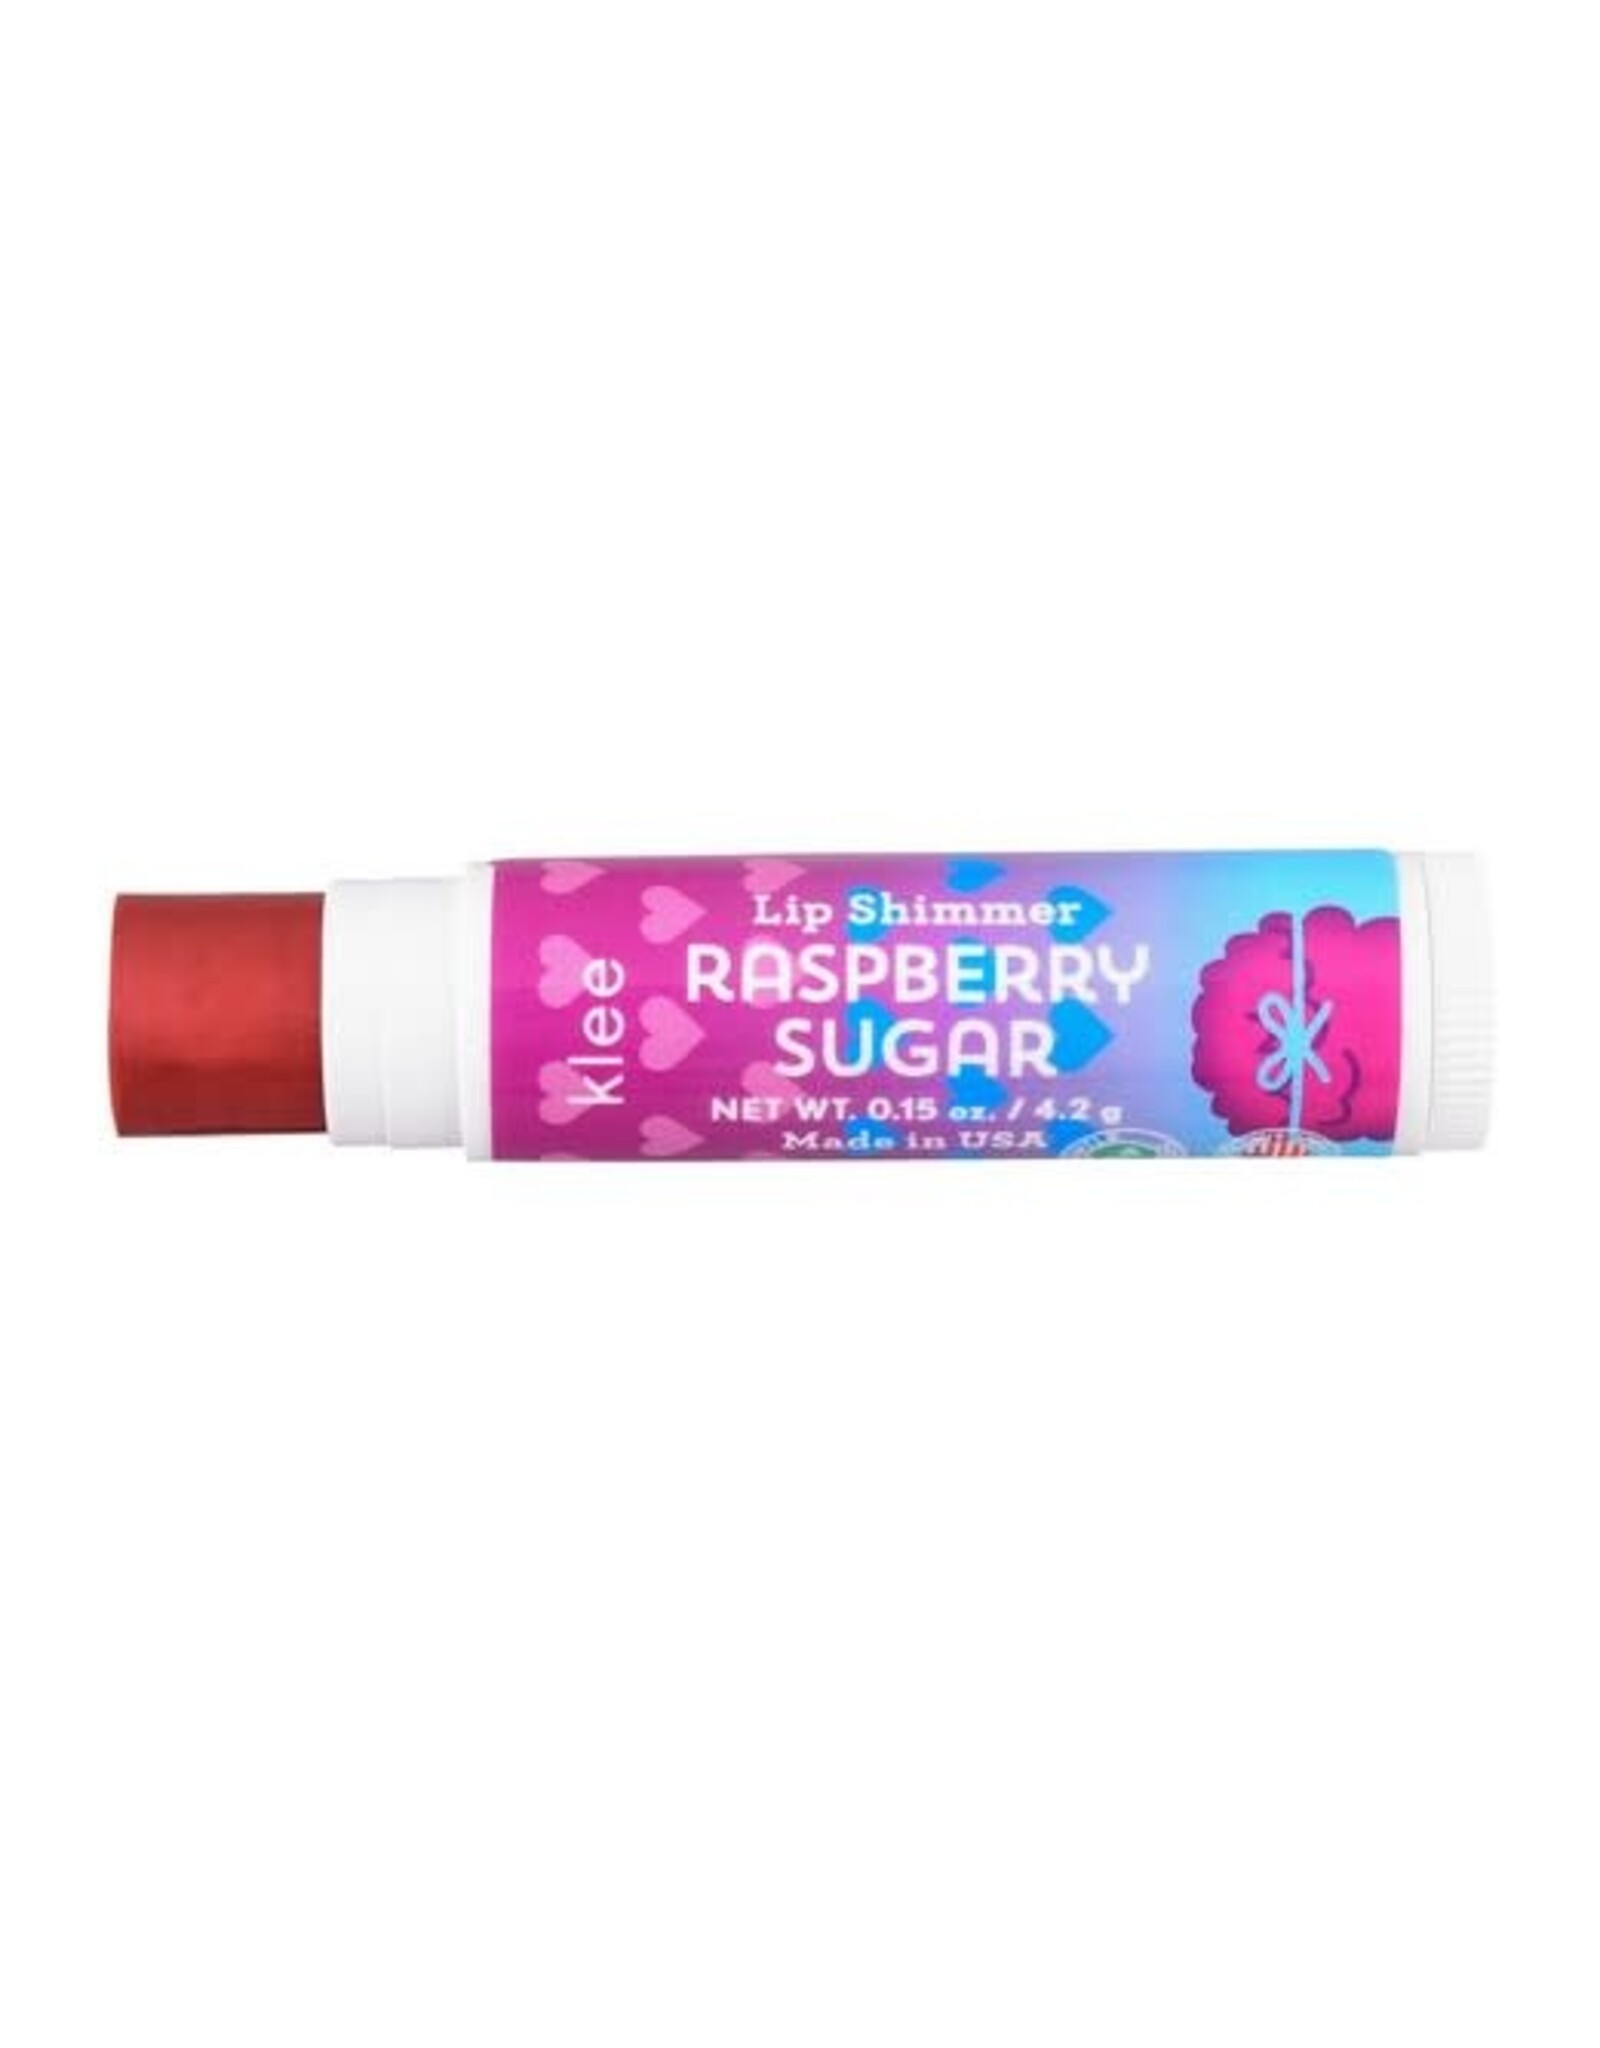 Klee Naturals/Easy A Lip Shimmer - Raspberry Sugar